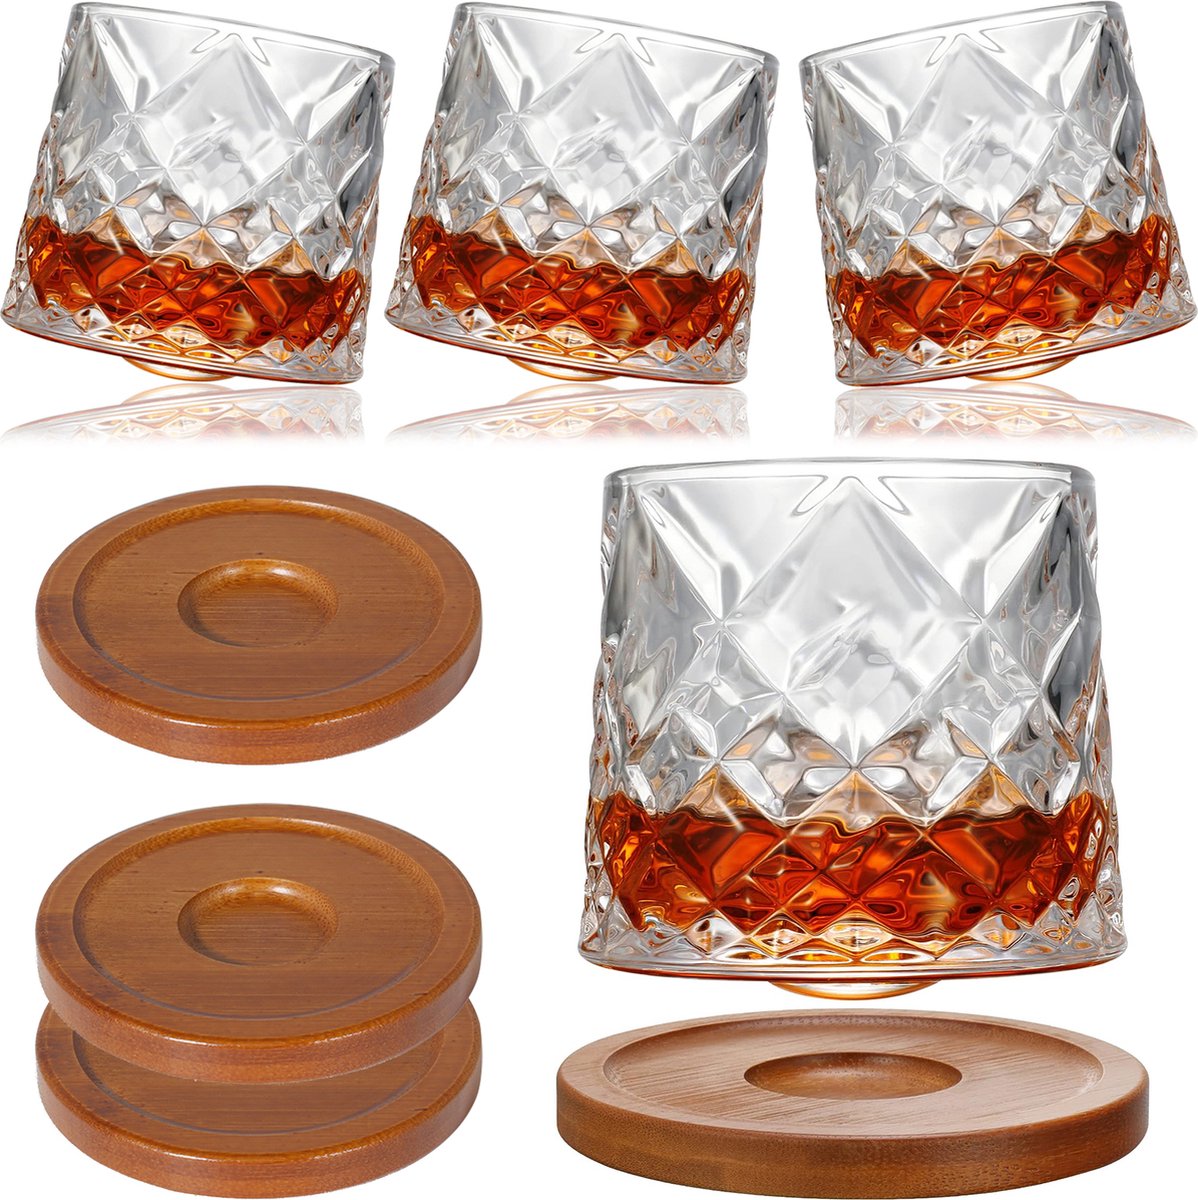 Uten Luxe whiskey glas vier set van 4 glazen - 275ml - Incl Onderzetters - Transparant Diamant Patroon